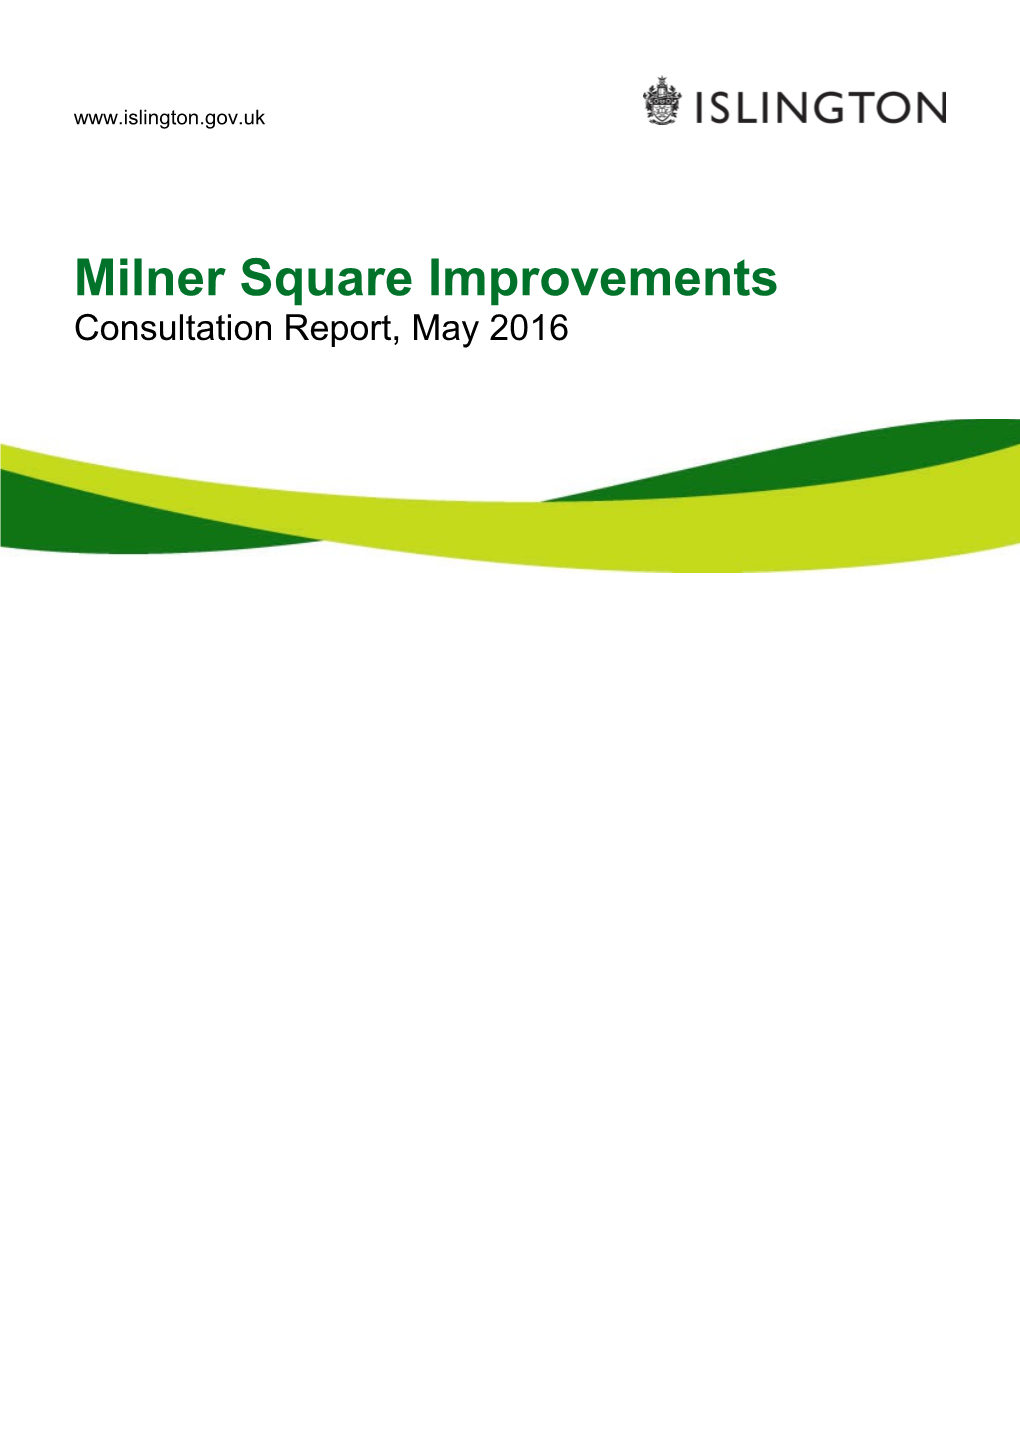 Milner Square May 2016 Consultation Report